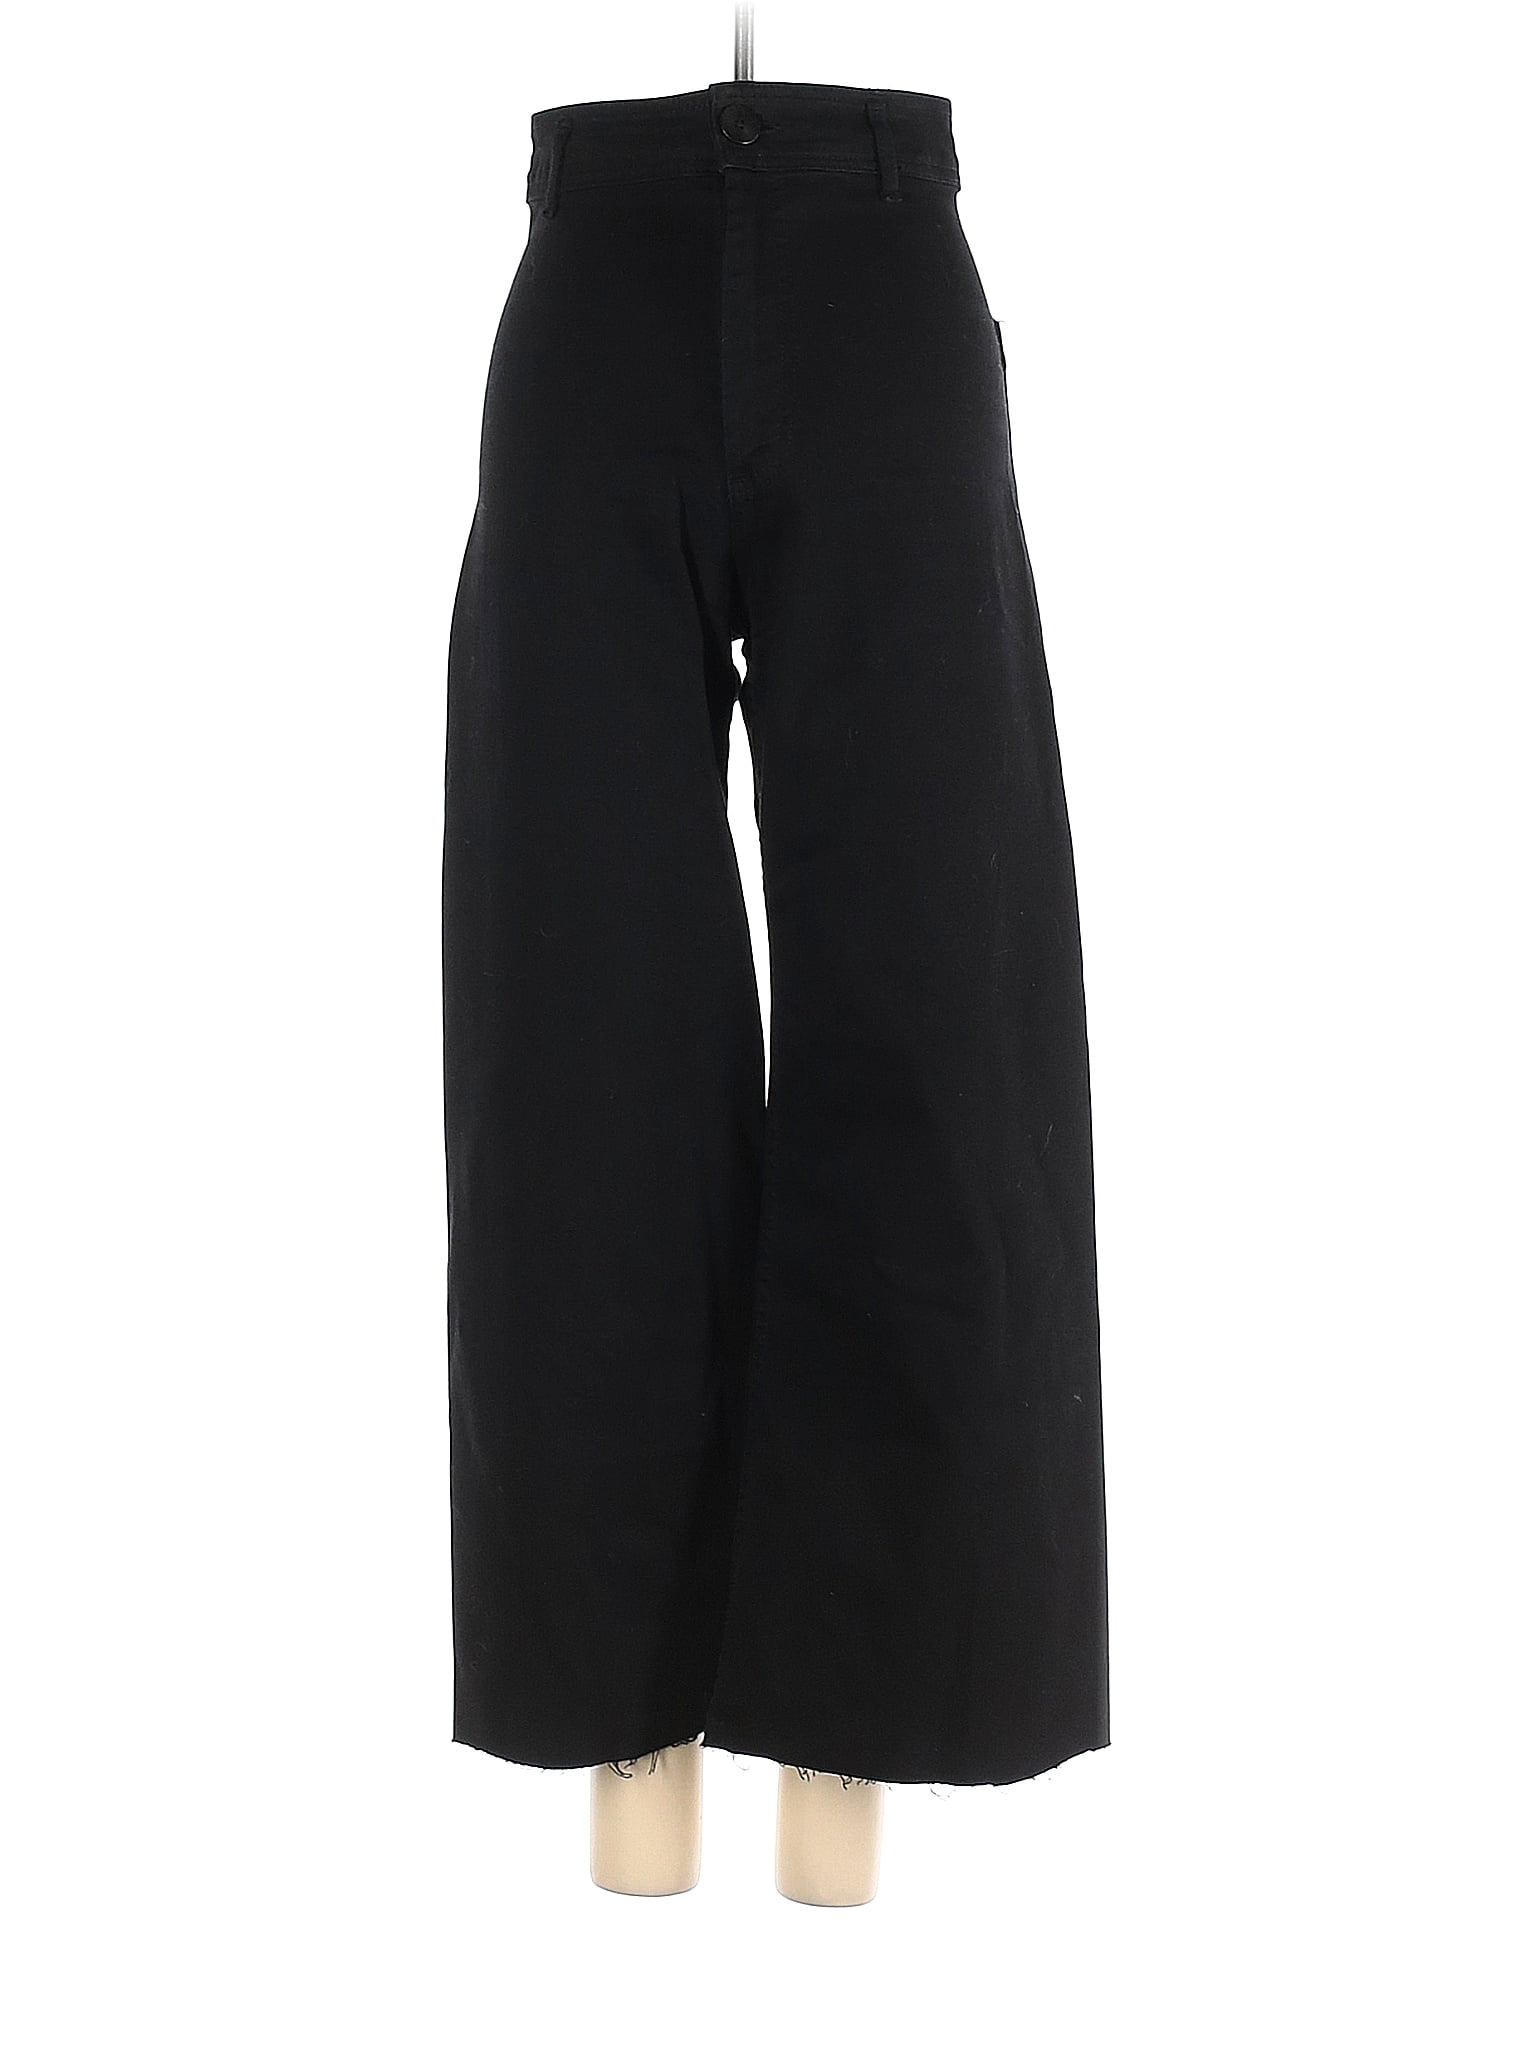 Zara Black Jeans Size 2 - 30% off | thredUP